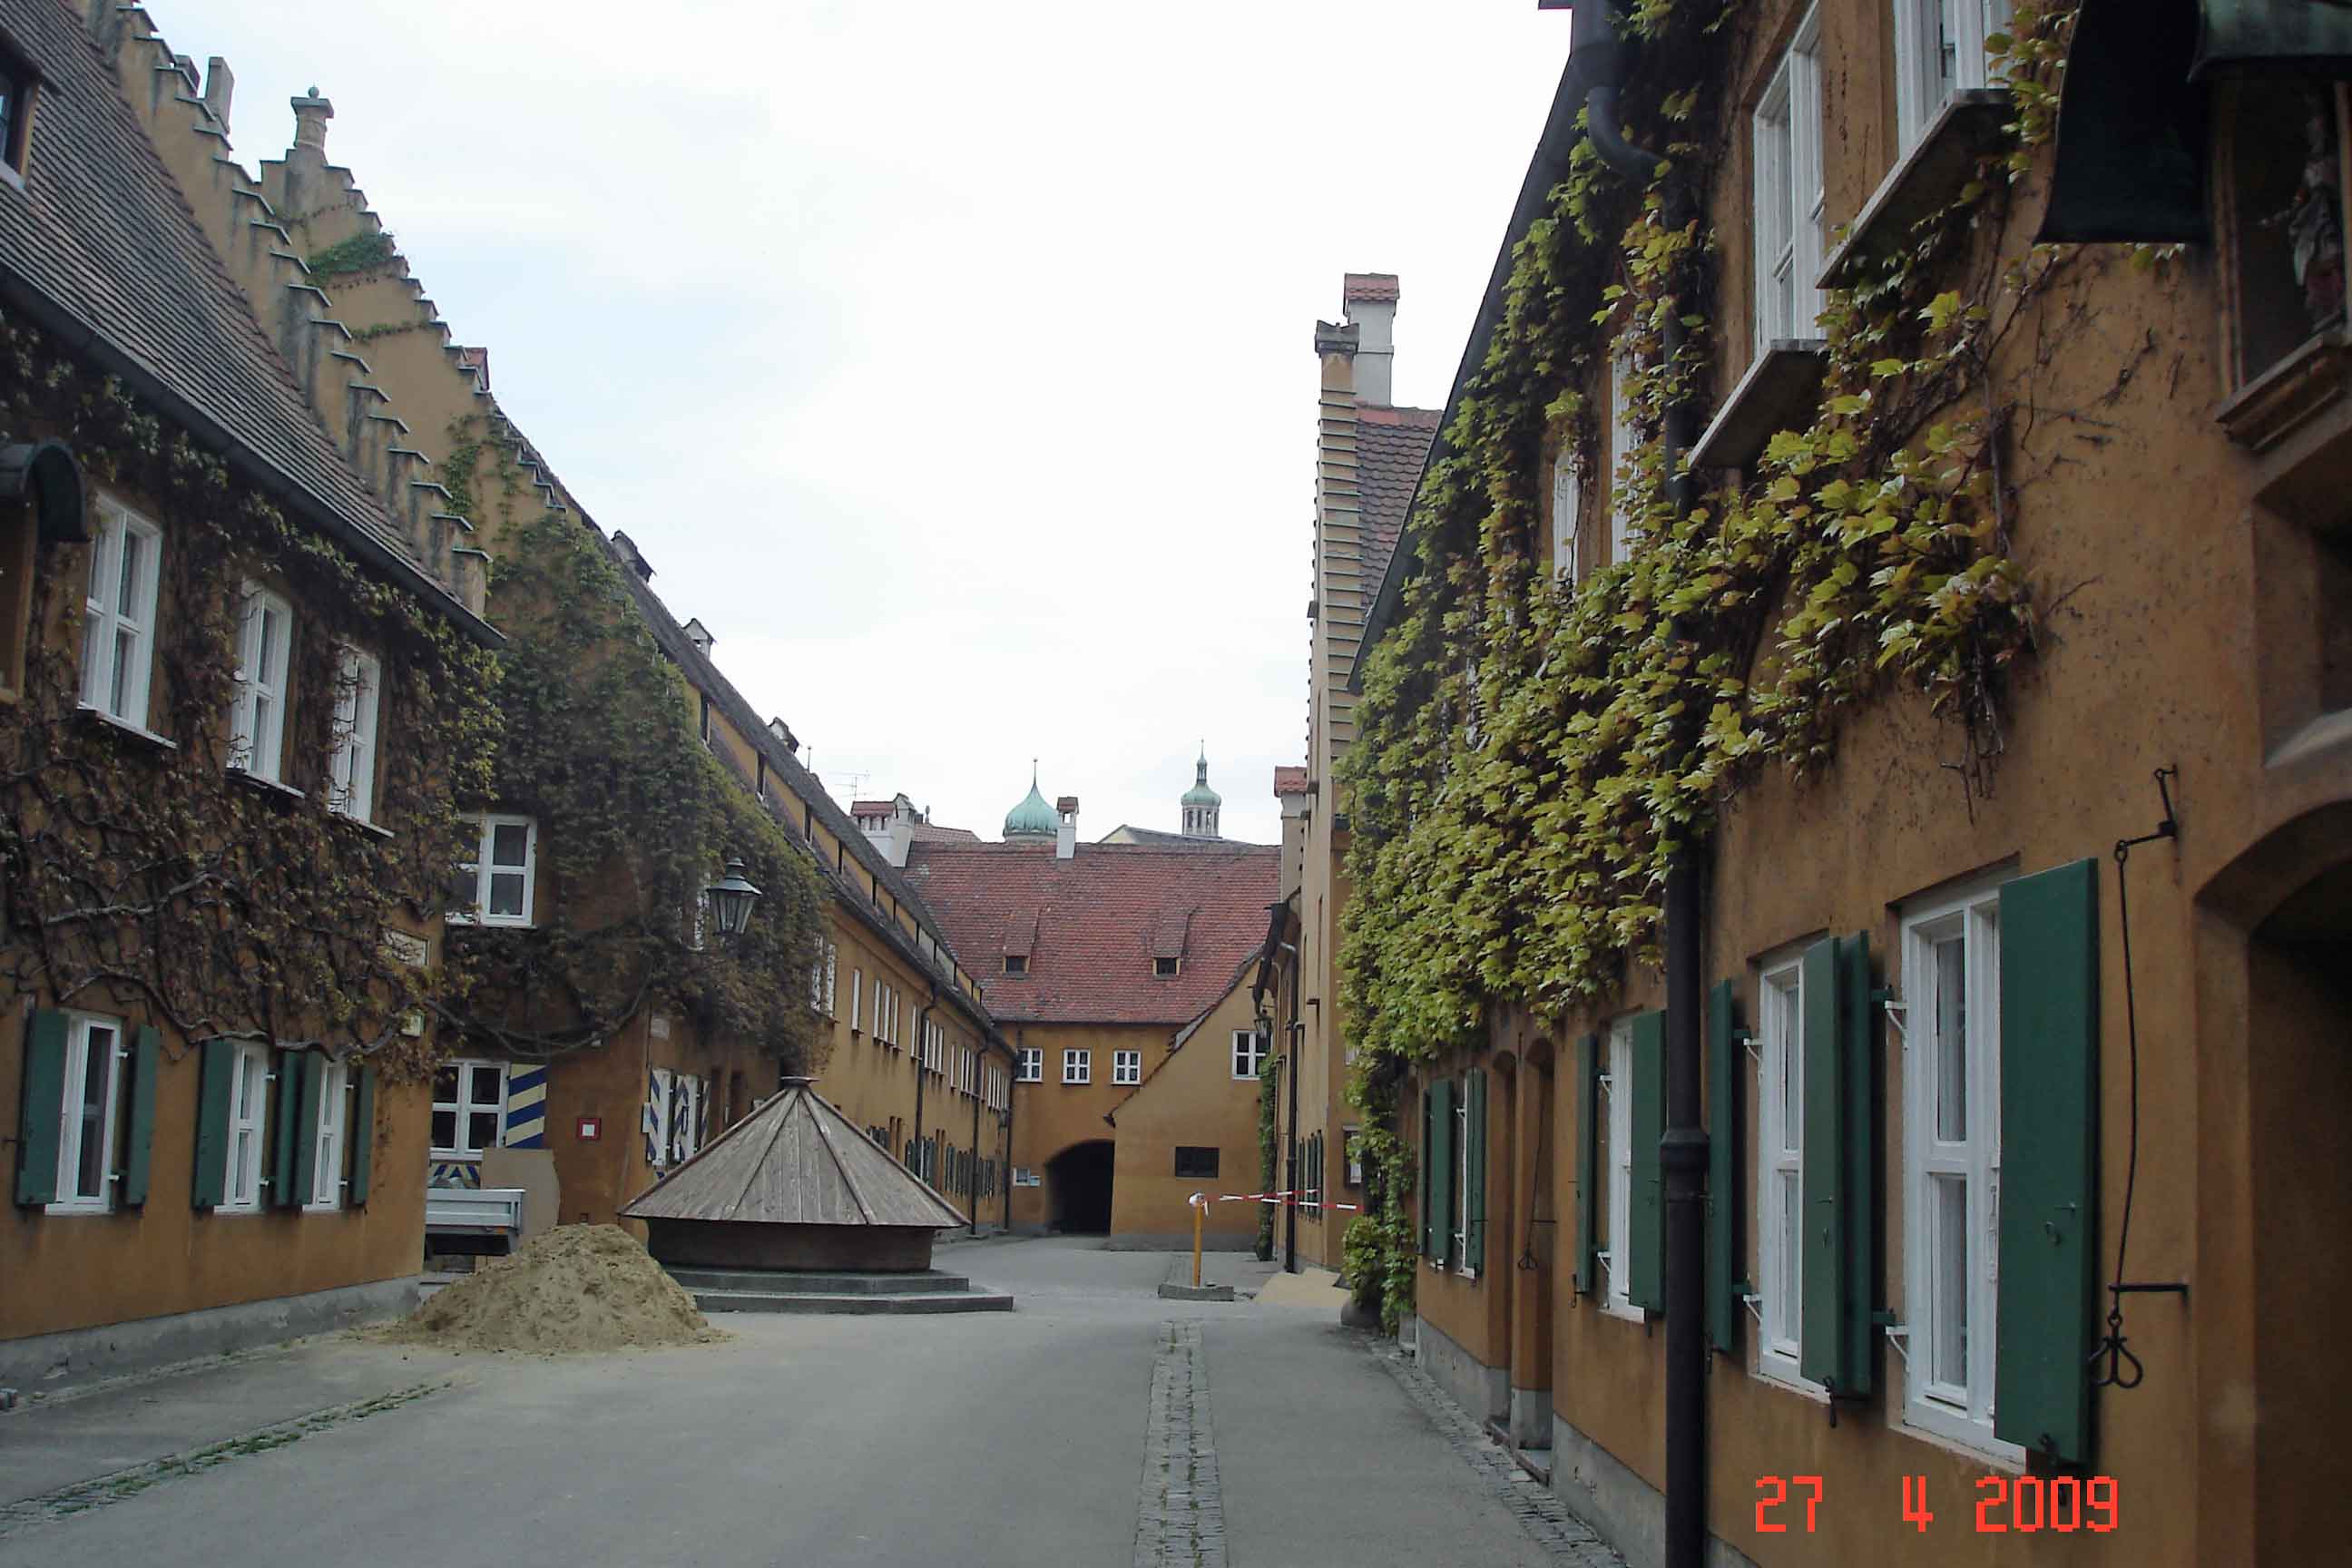 The Fuggerei social settlement - a very pretty village - Augsburg 